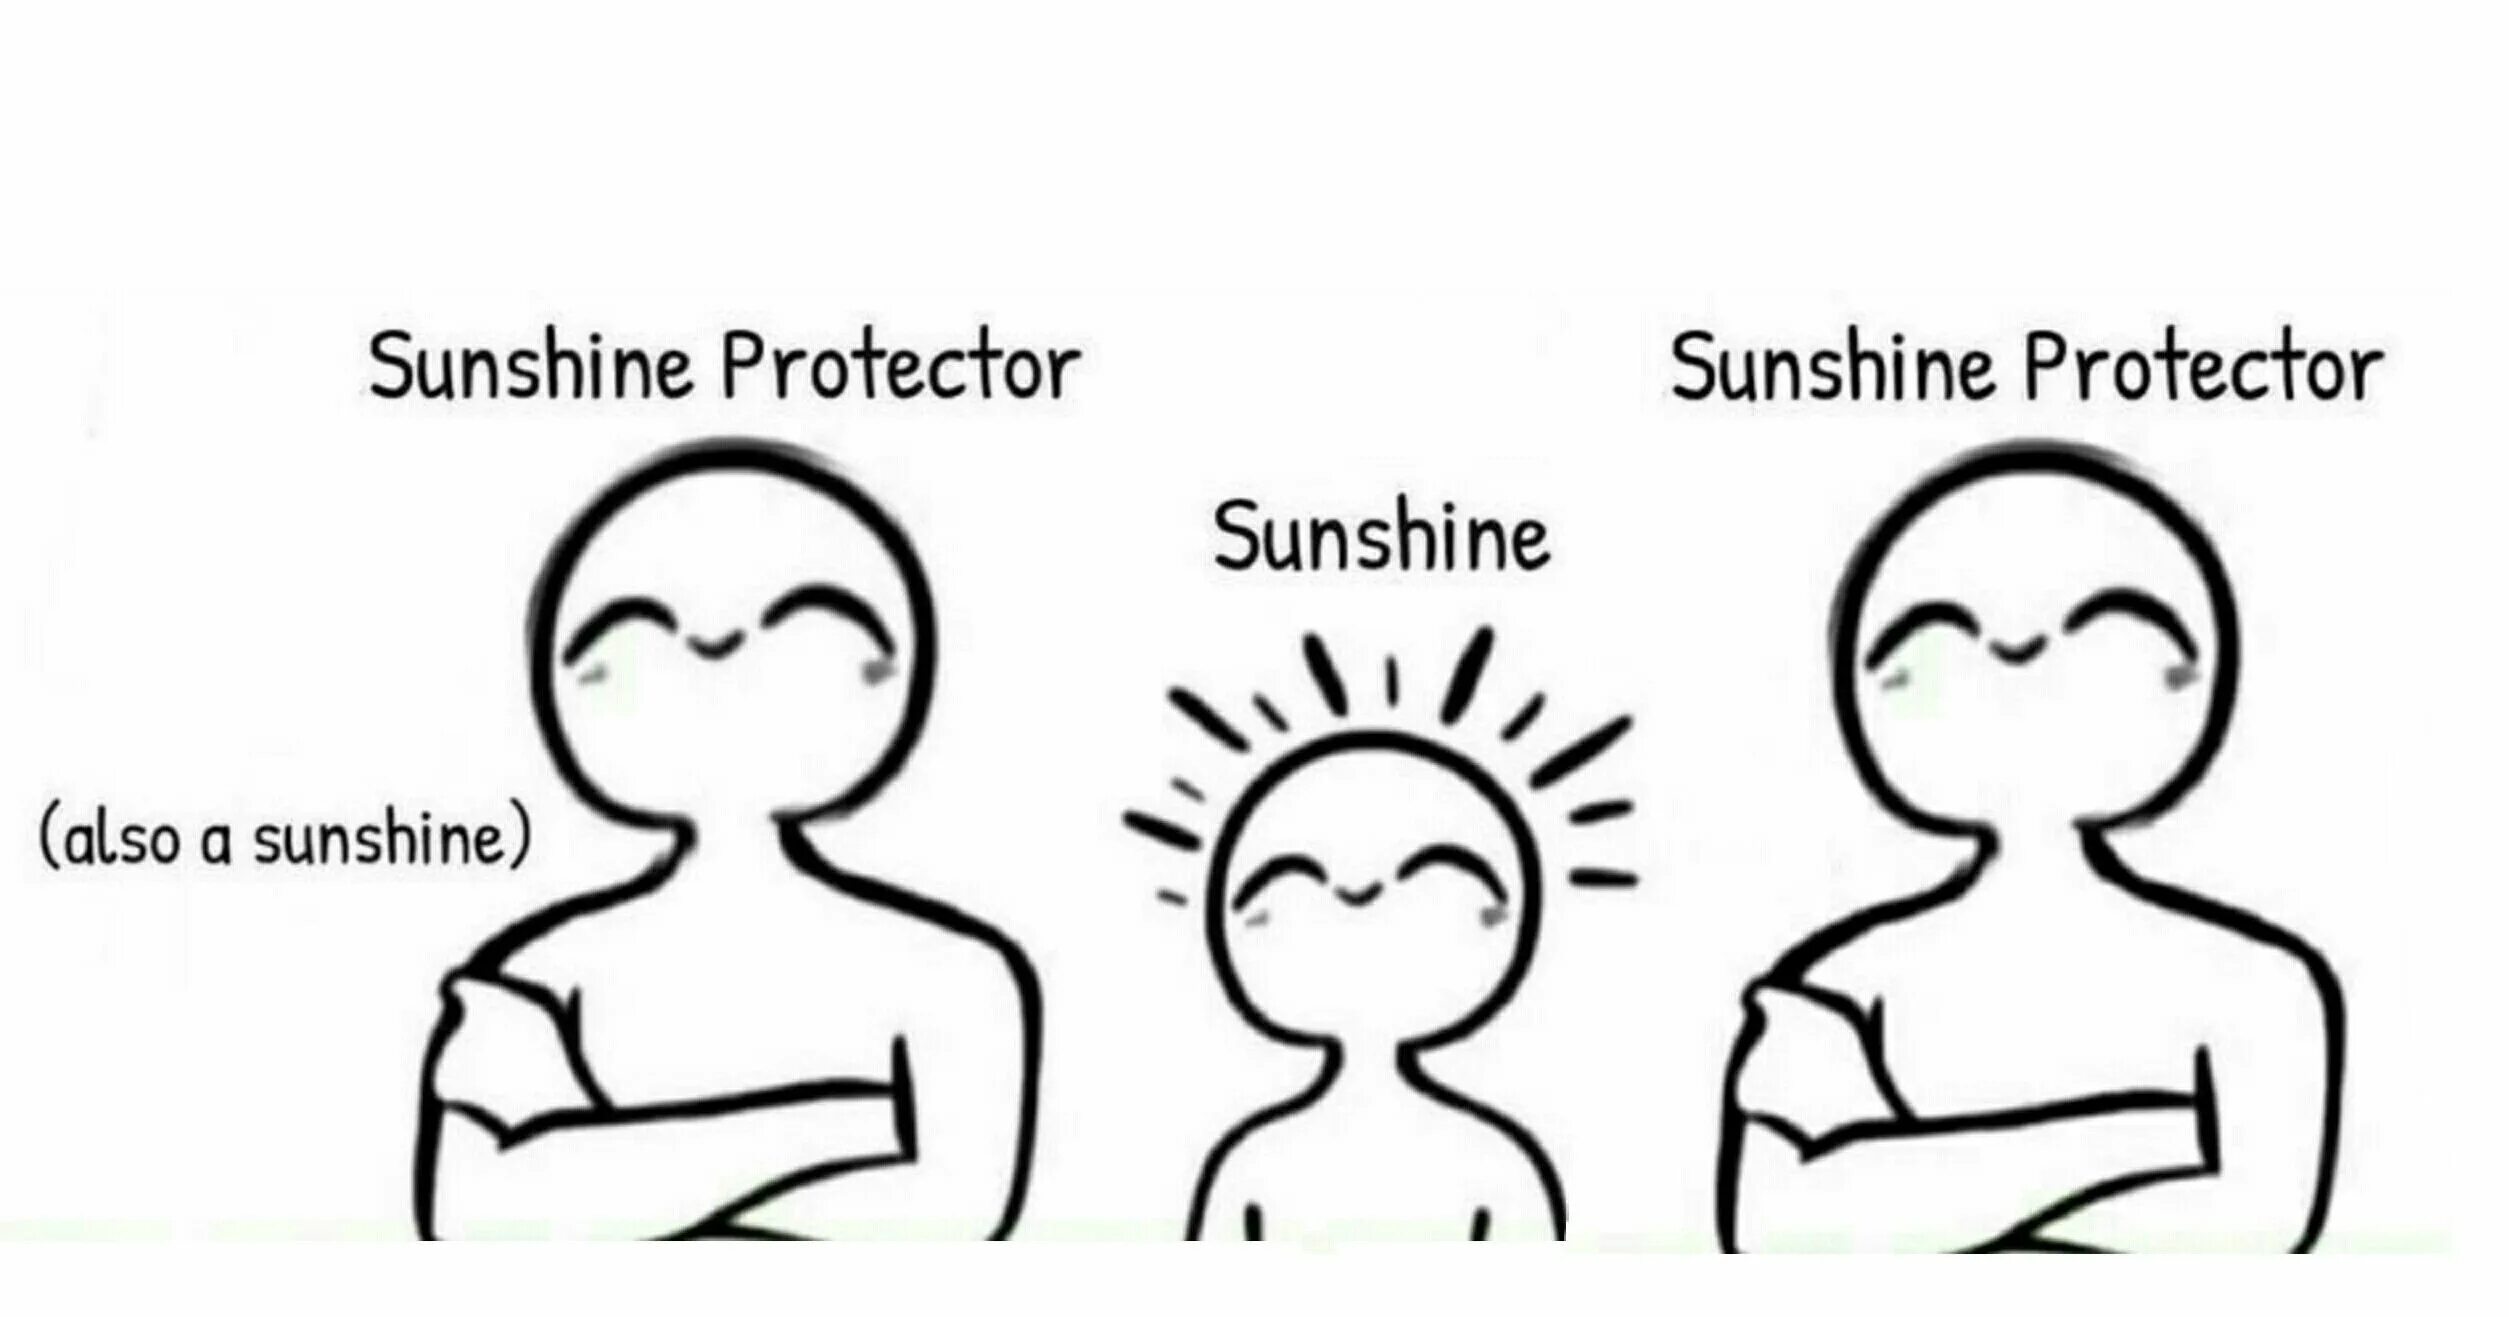 Also protects. Мем Sunshine Protector. Саншайн и Саншайн протектор. Sunshine Sunshine Protector. Sunshine Sunshine Protector meme.